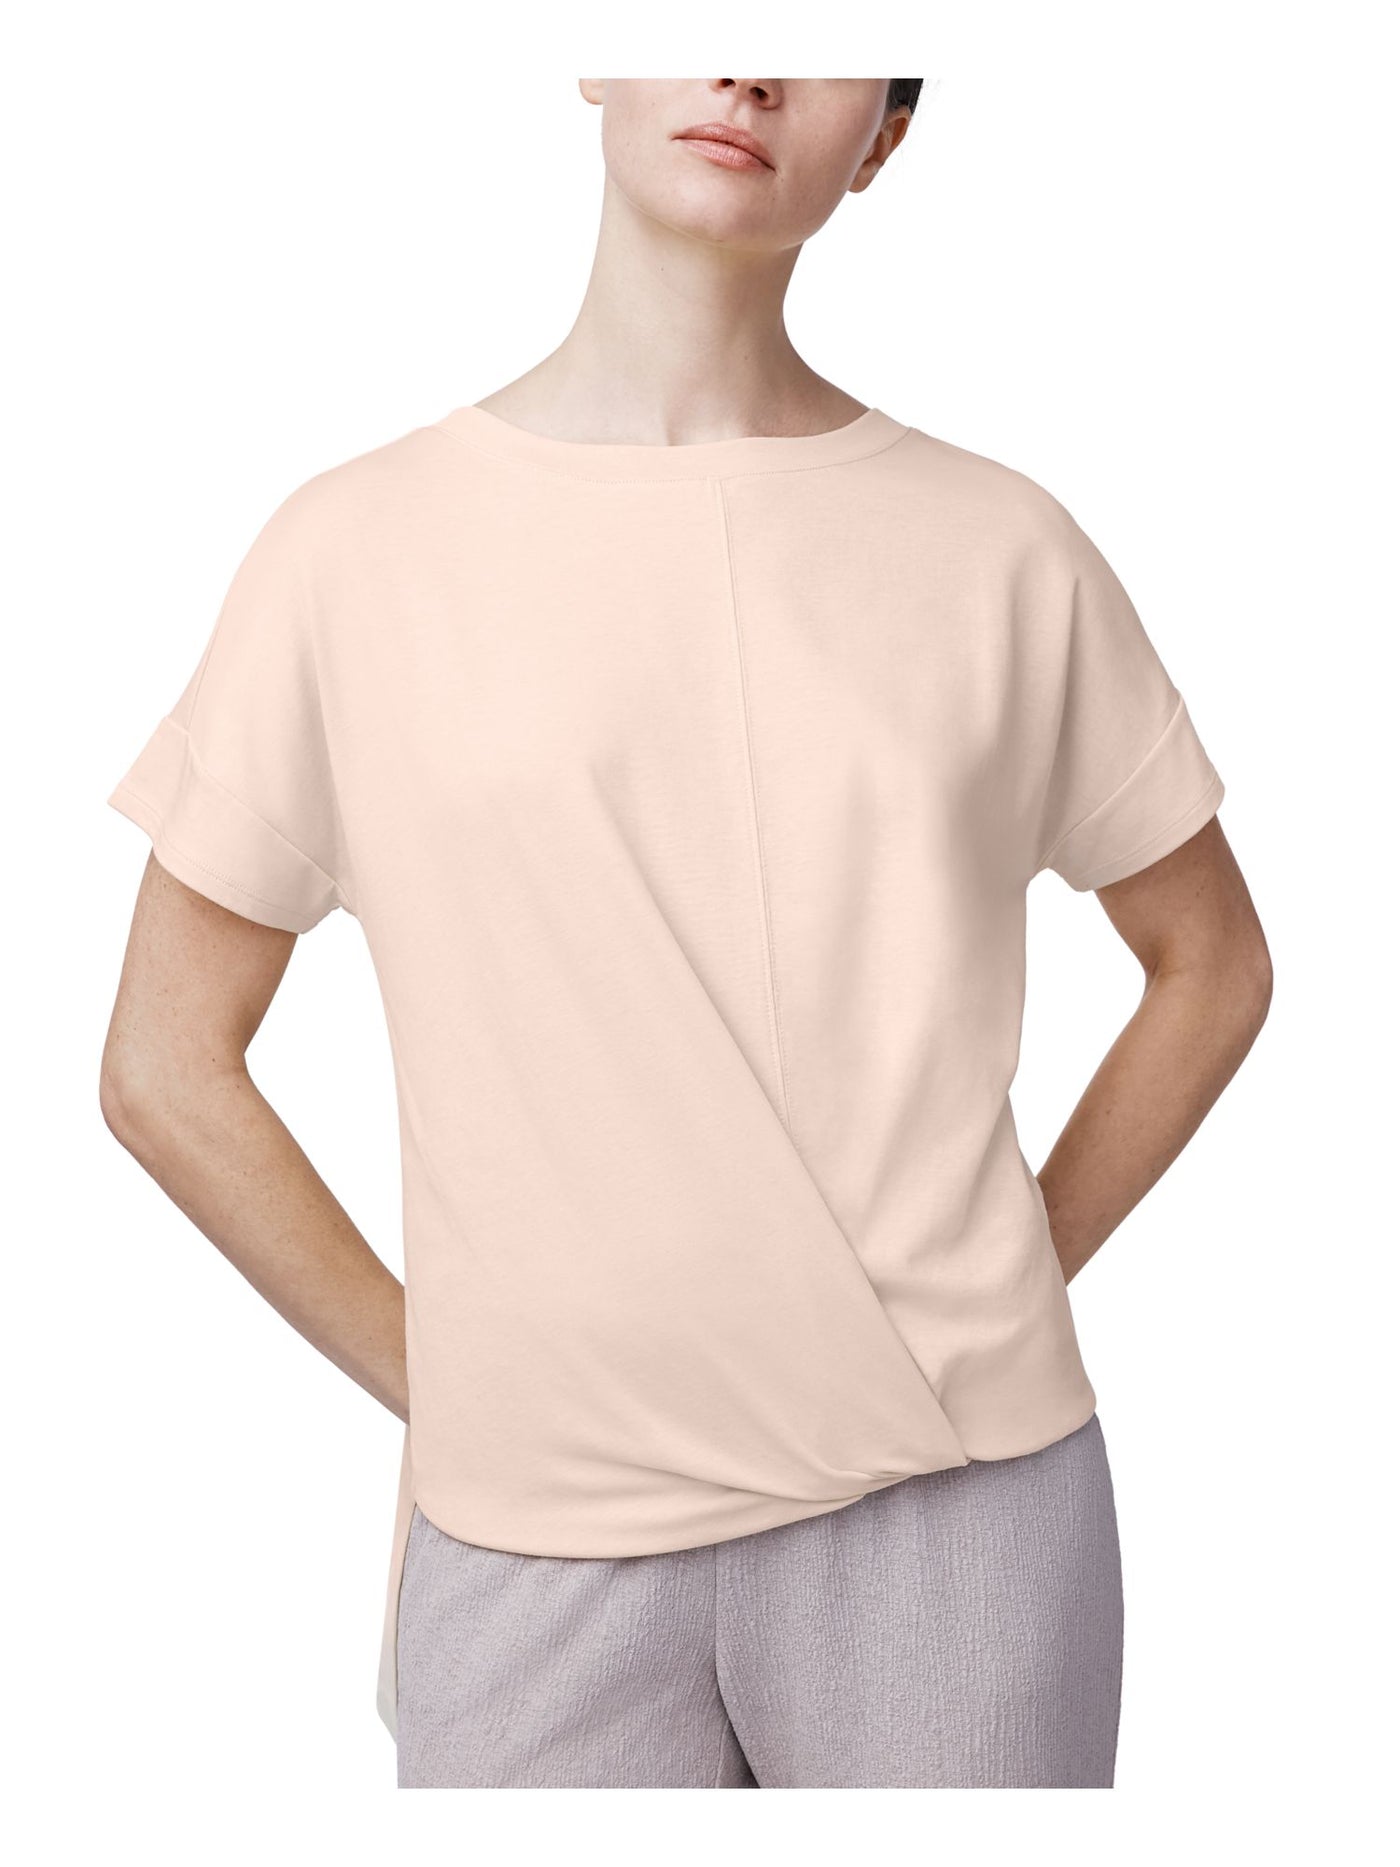 B NEW YORK Womens Pink Short Sleeve Jewel Neck Top Size: S